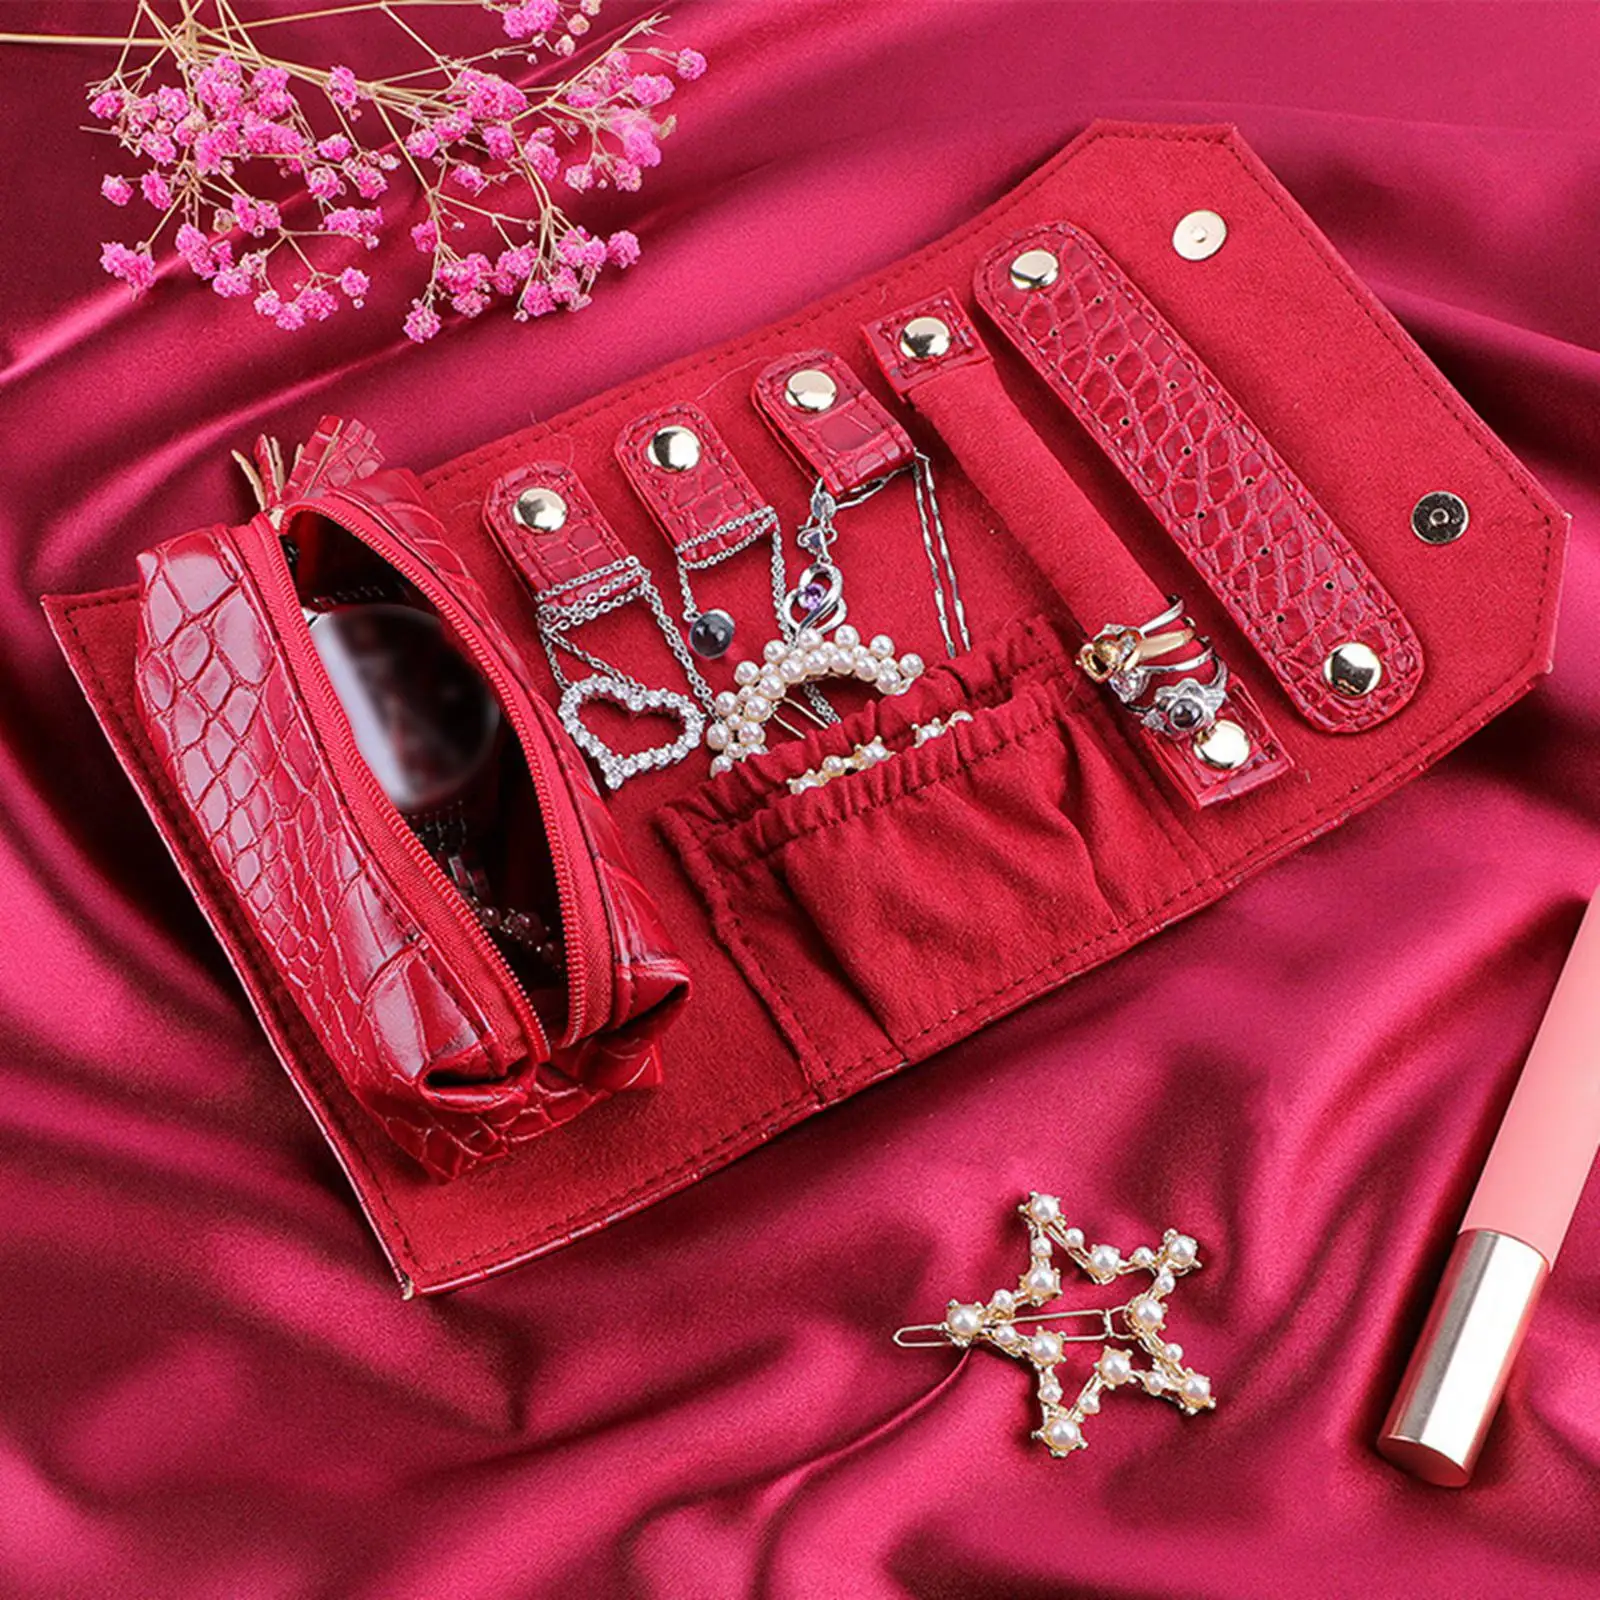 Portable Jewelry Roll Package Storage Organizer Storing Watches, Bracelets, Lipsticks Earrings, Ear Studs Accessory